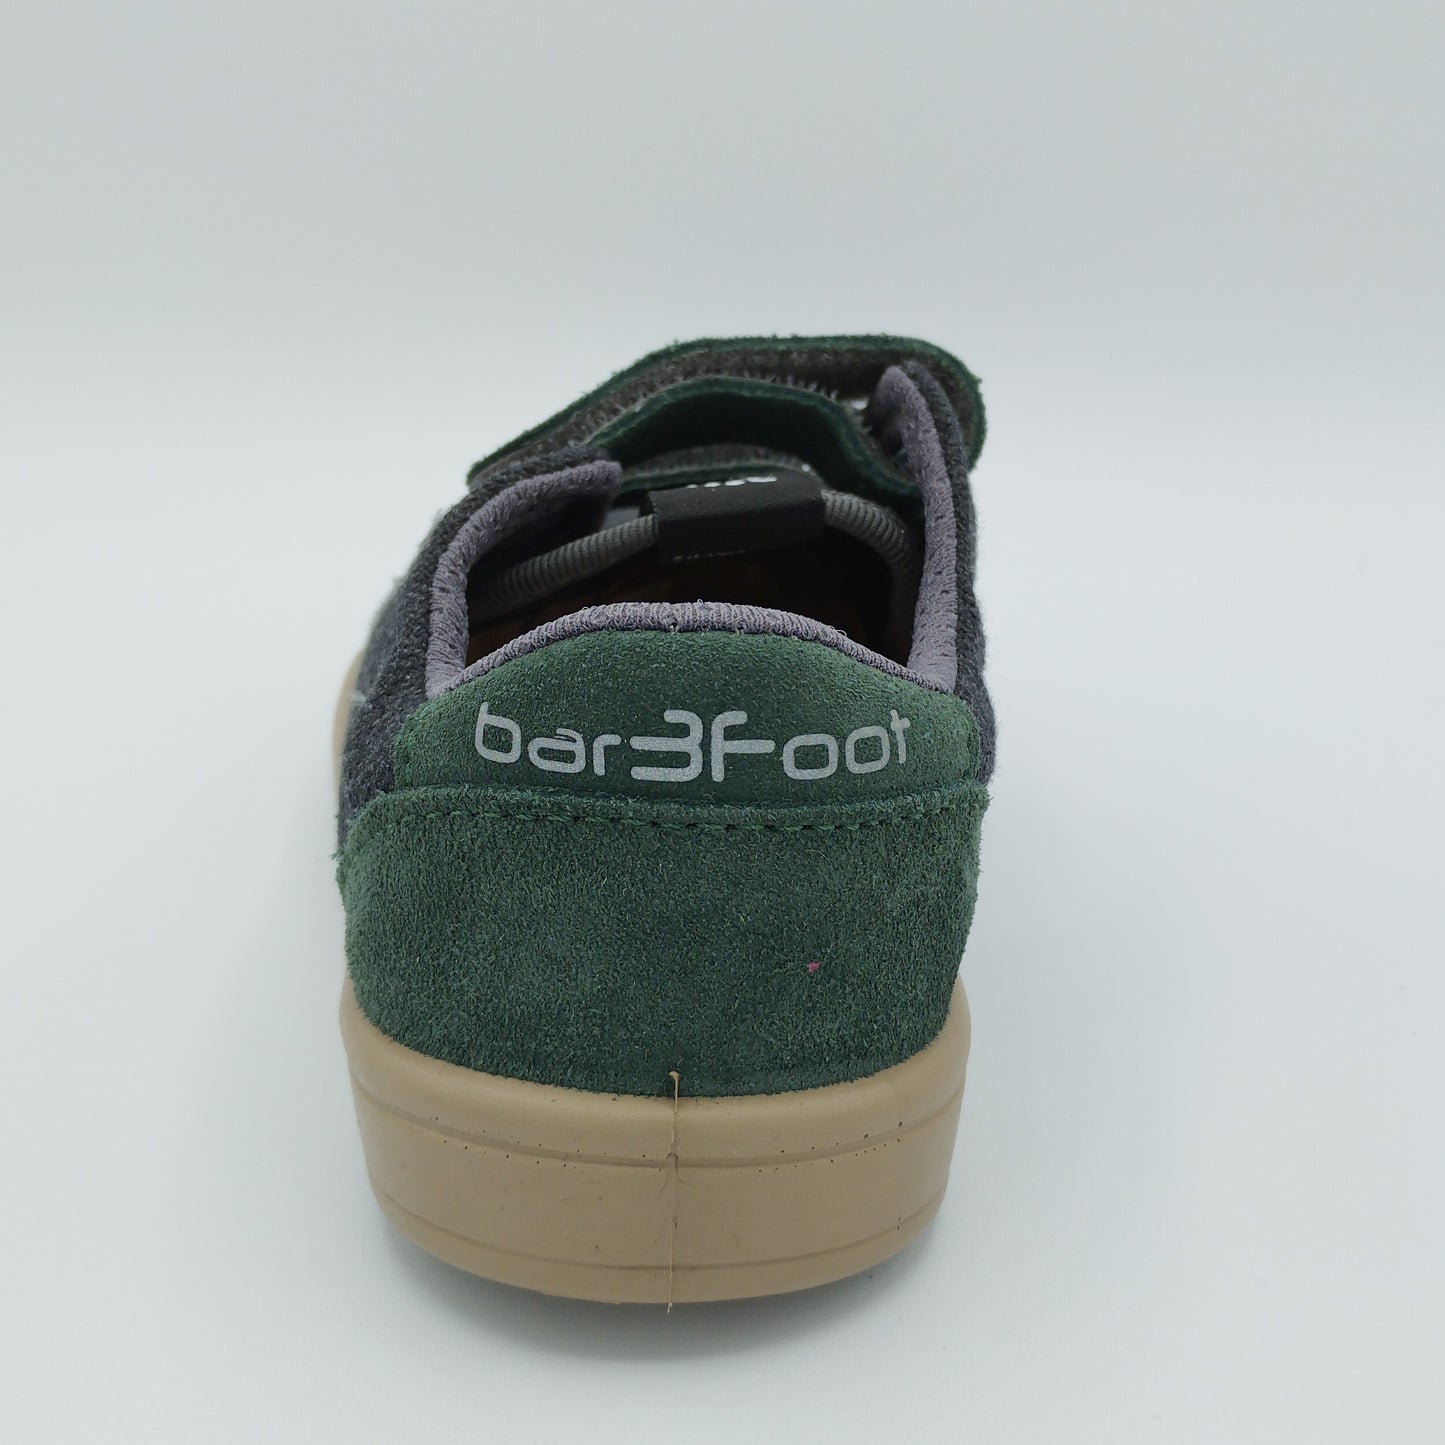 Bar3foot Sneakers Gris Azul